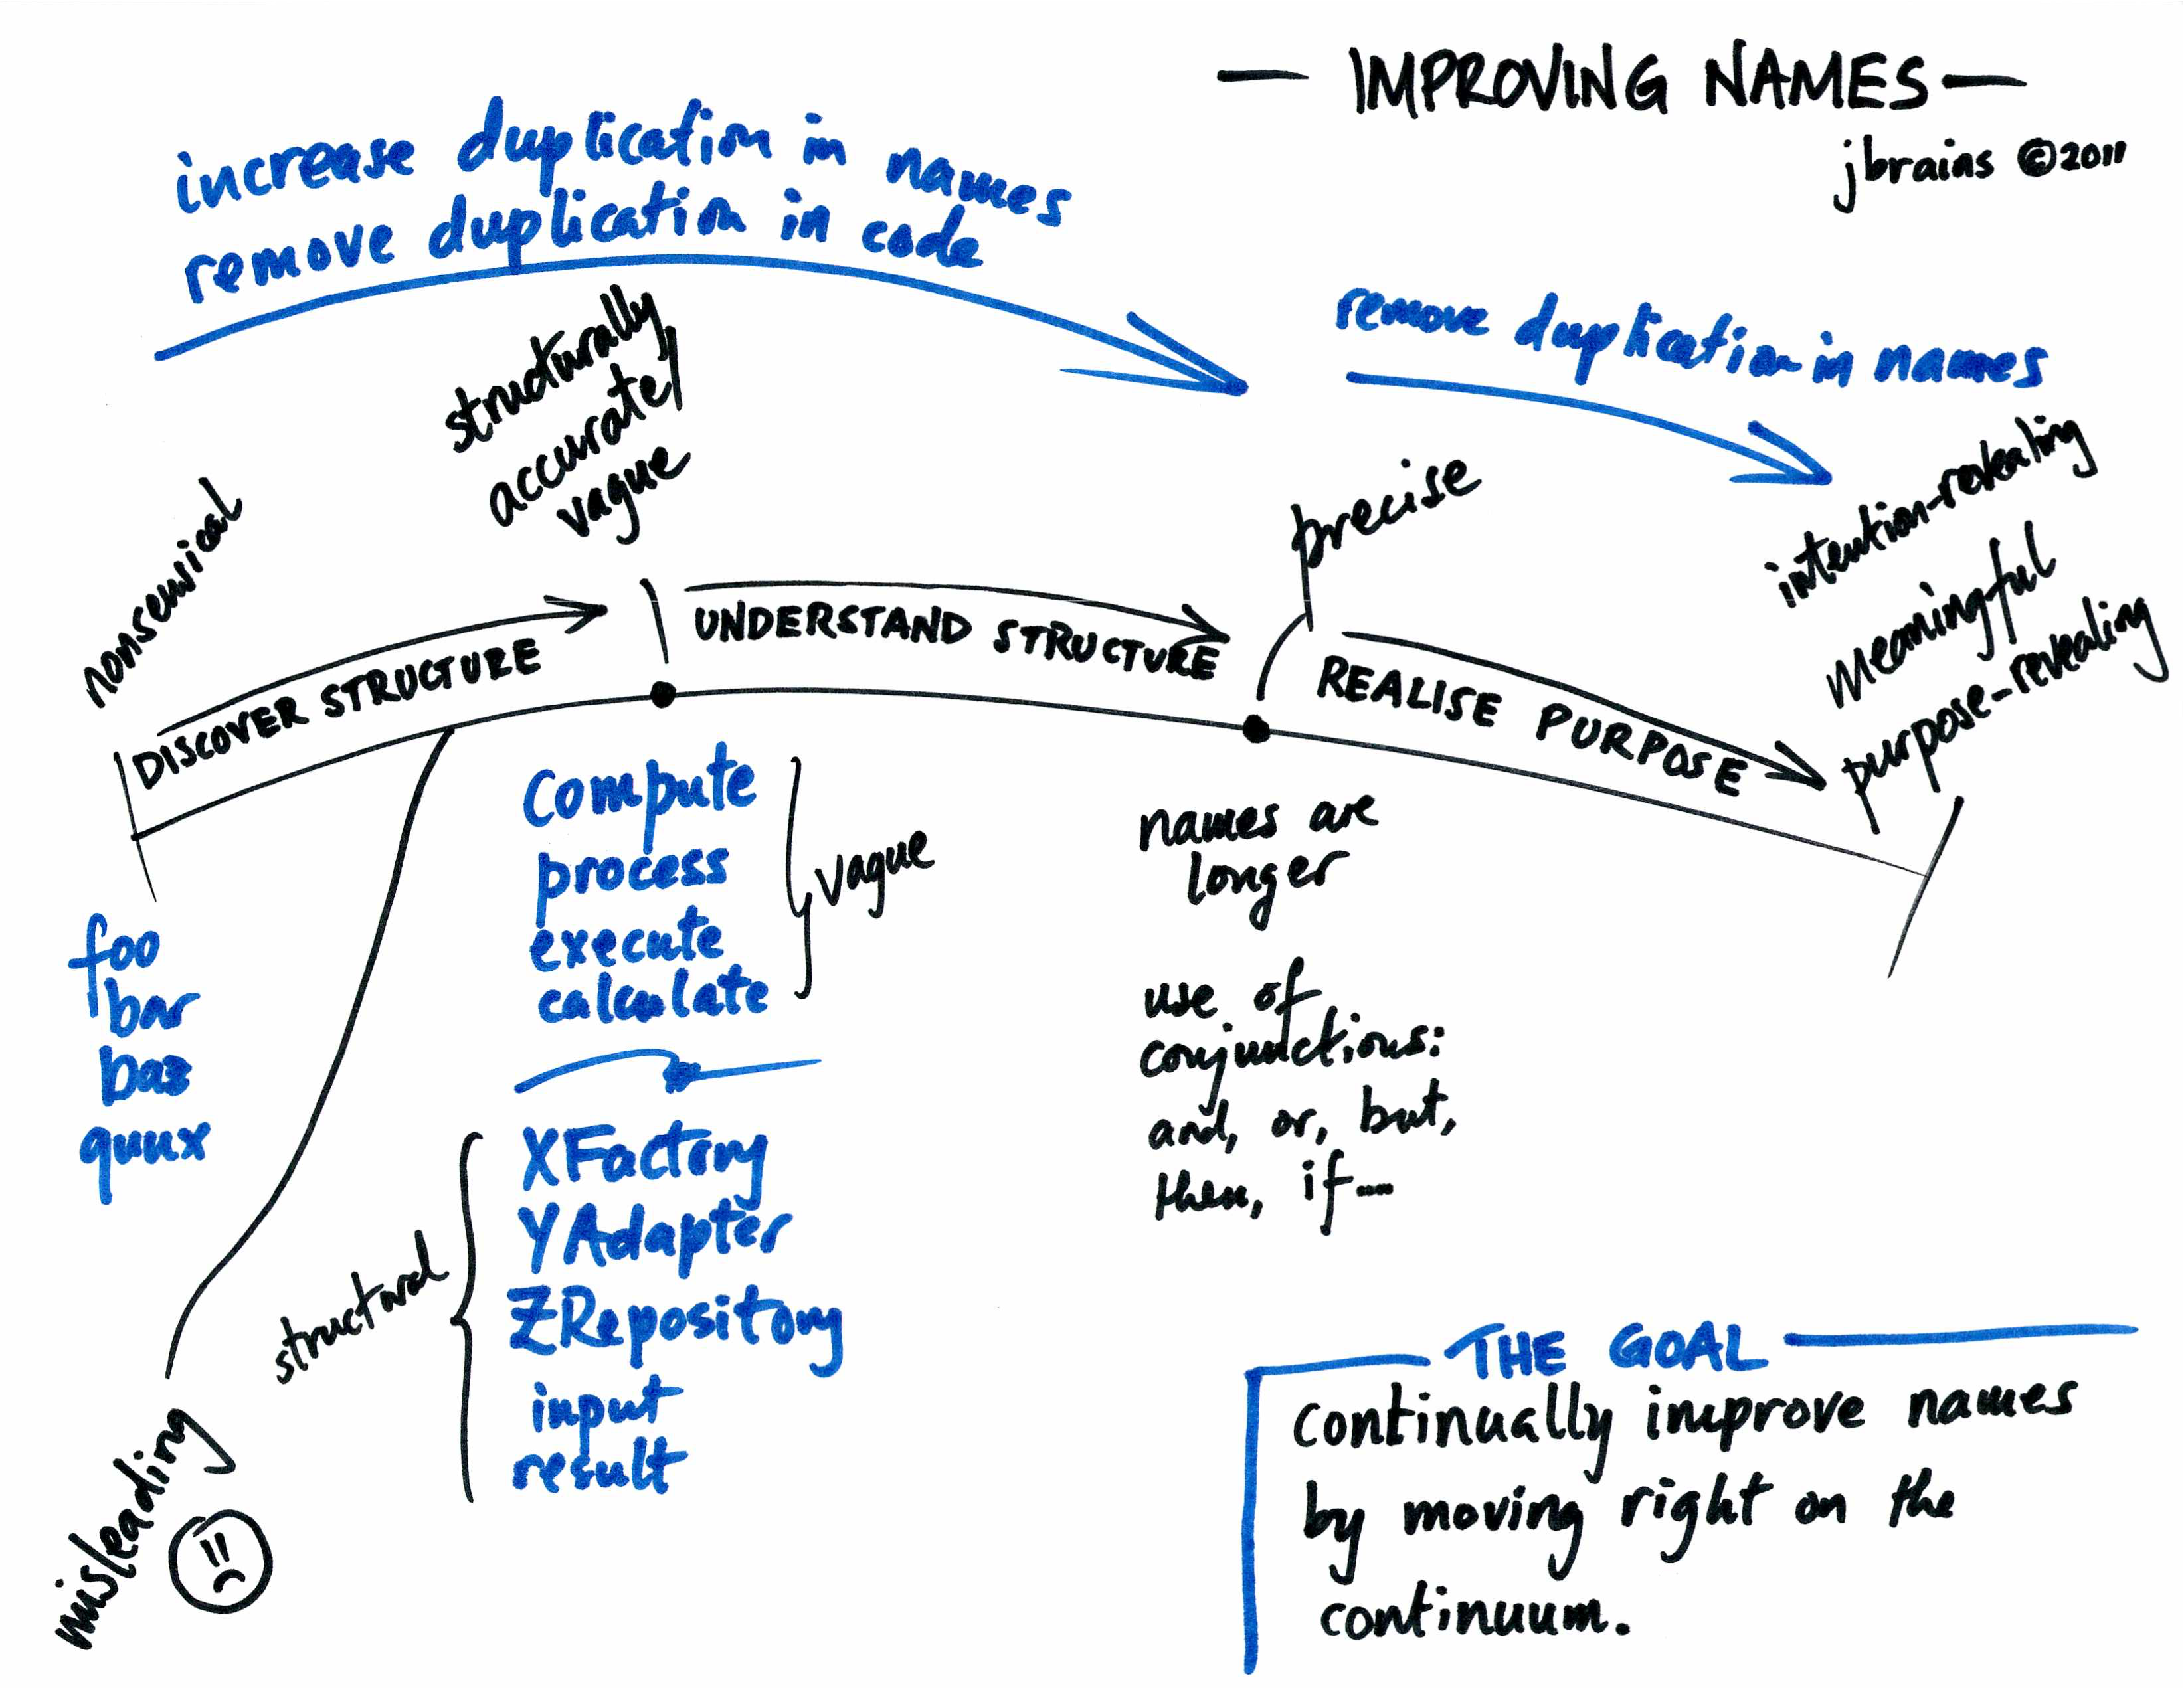 a diagram regarding the process of improving names